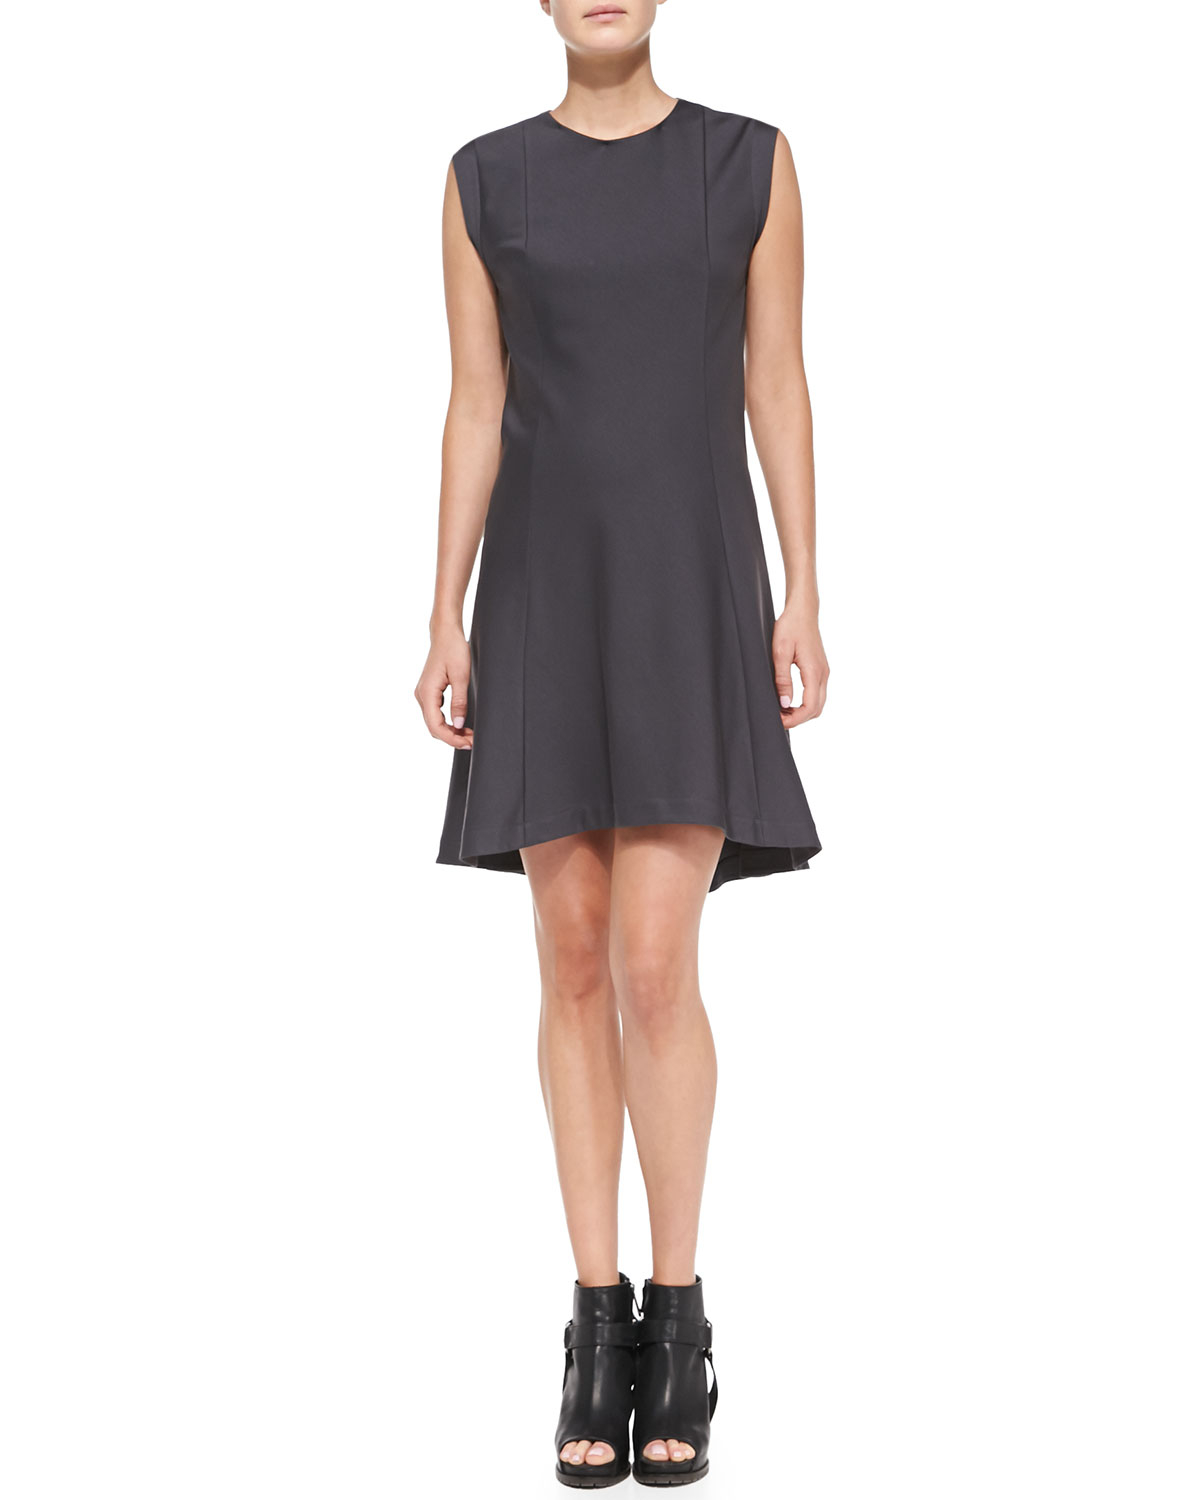 Lyst - Brunello cucinelli Asymmetric-underlay Knit Dress in Gray